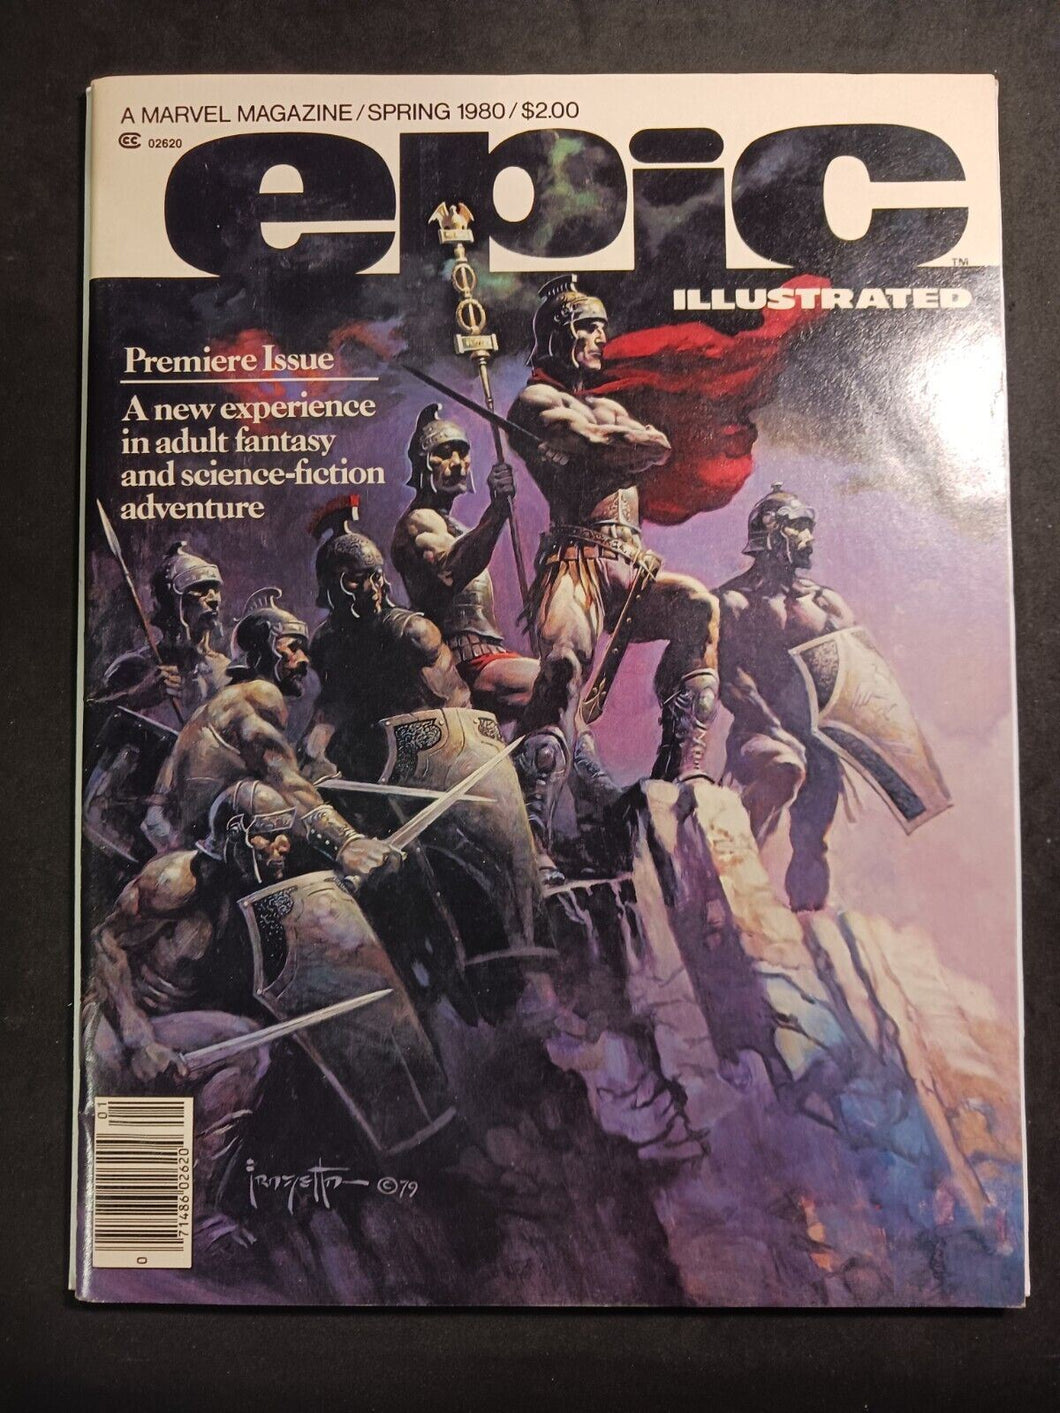 Epic Illustrated #1 A Marvel Magazine /Spring 1980